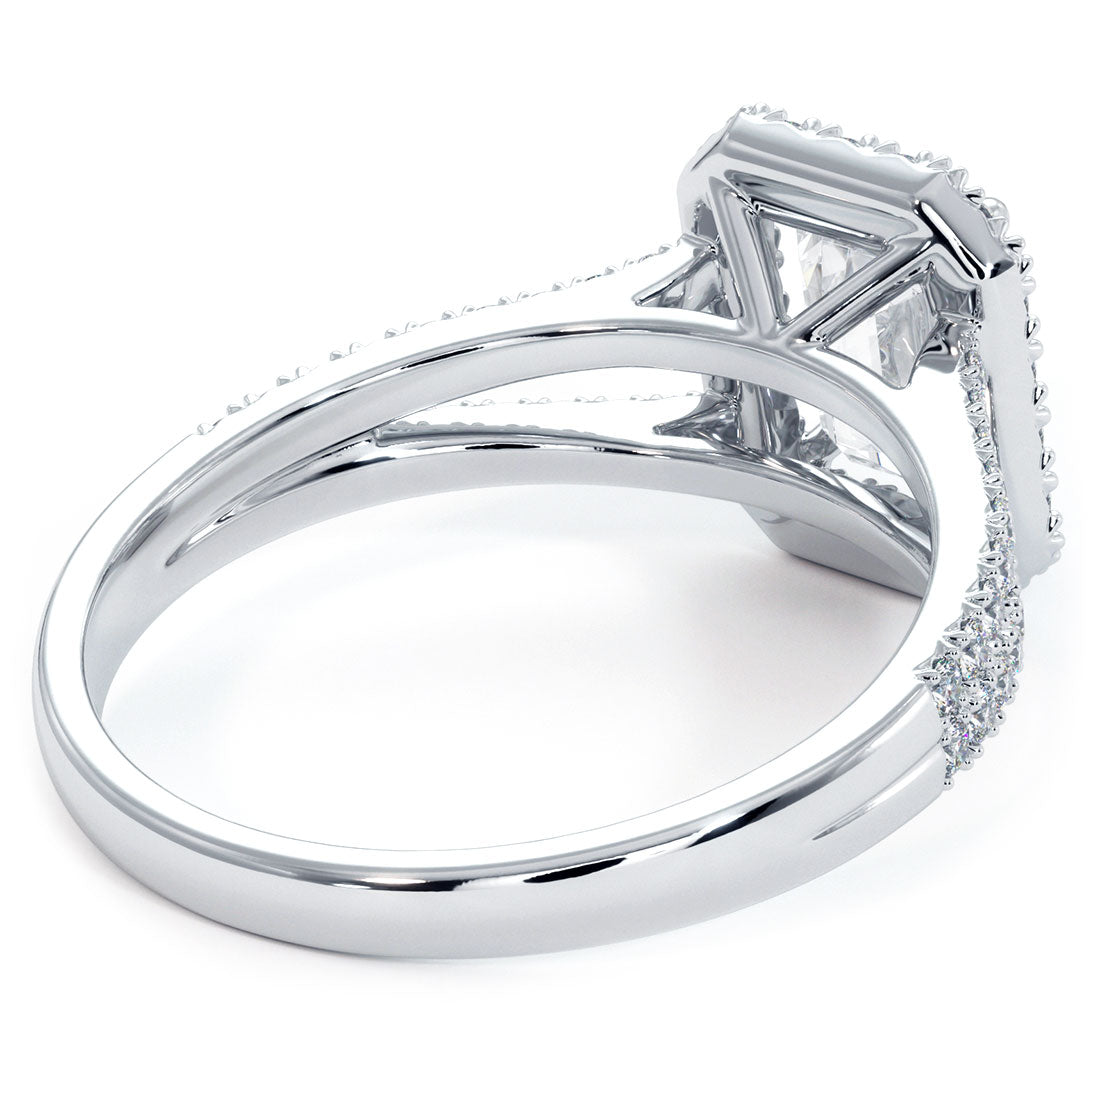 Radiant Halo With Split Shank Diamond Engagement Ring Setting